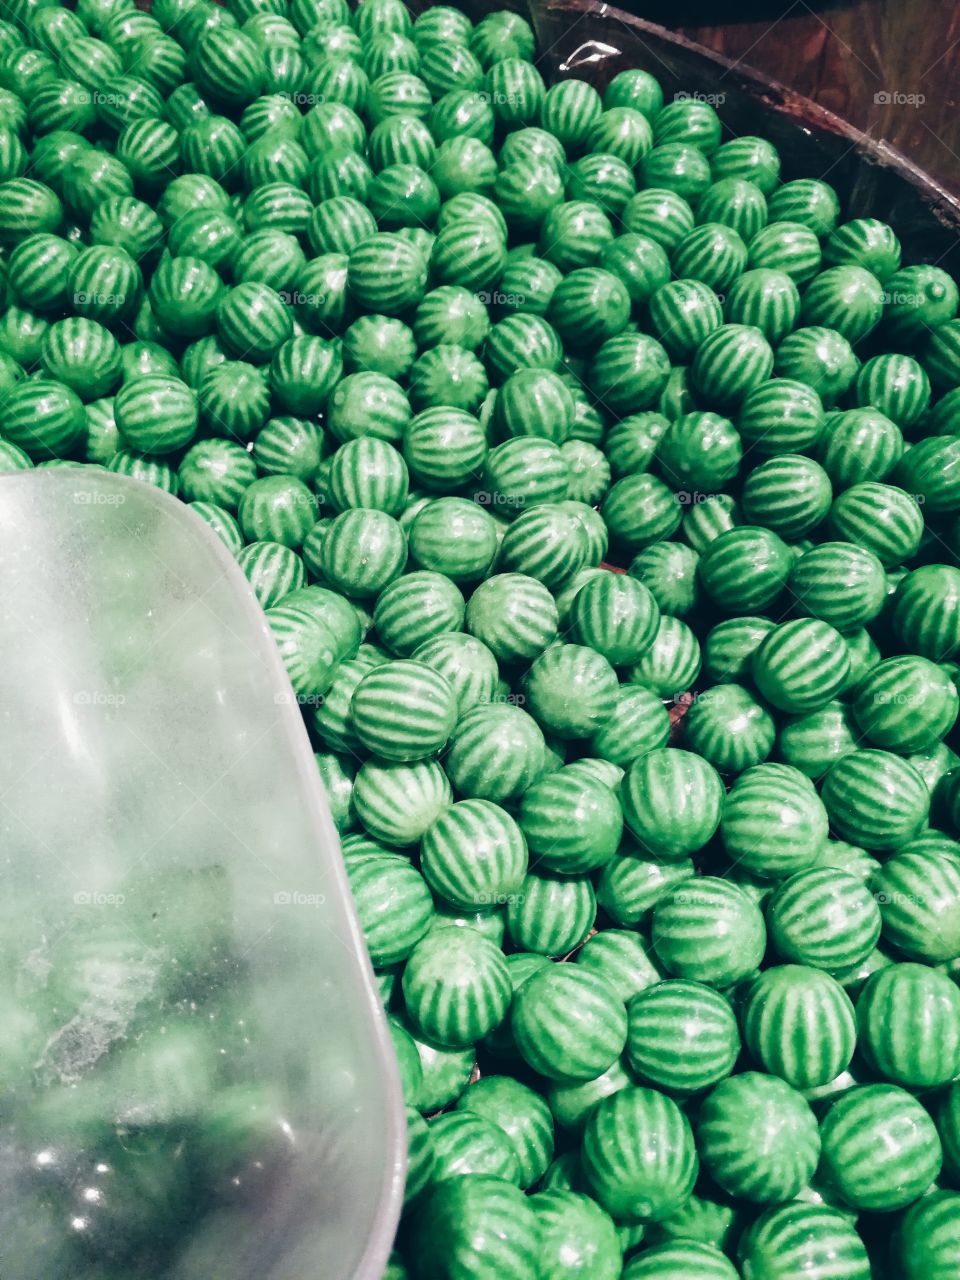 Green candies